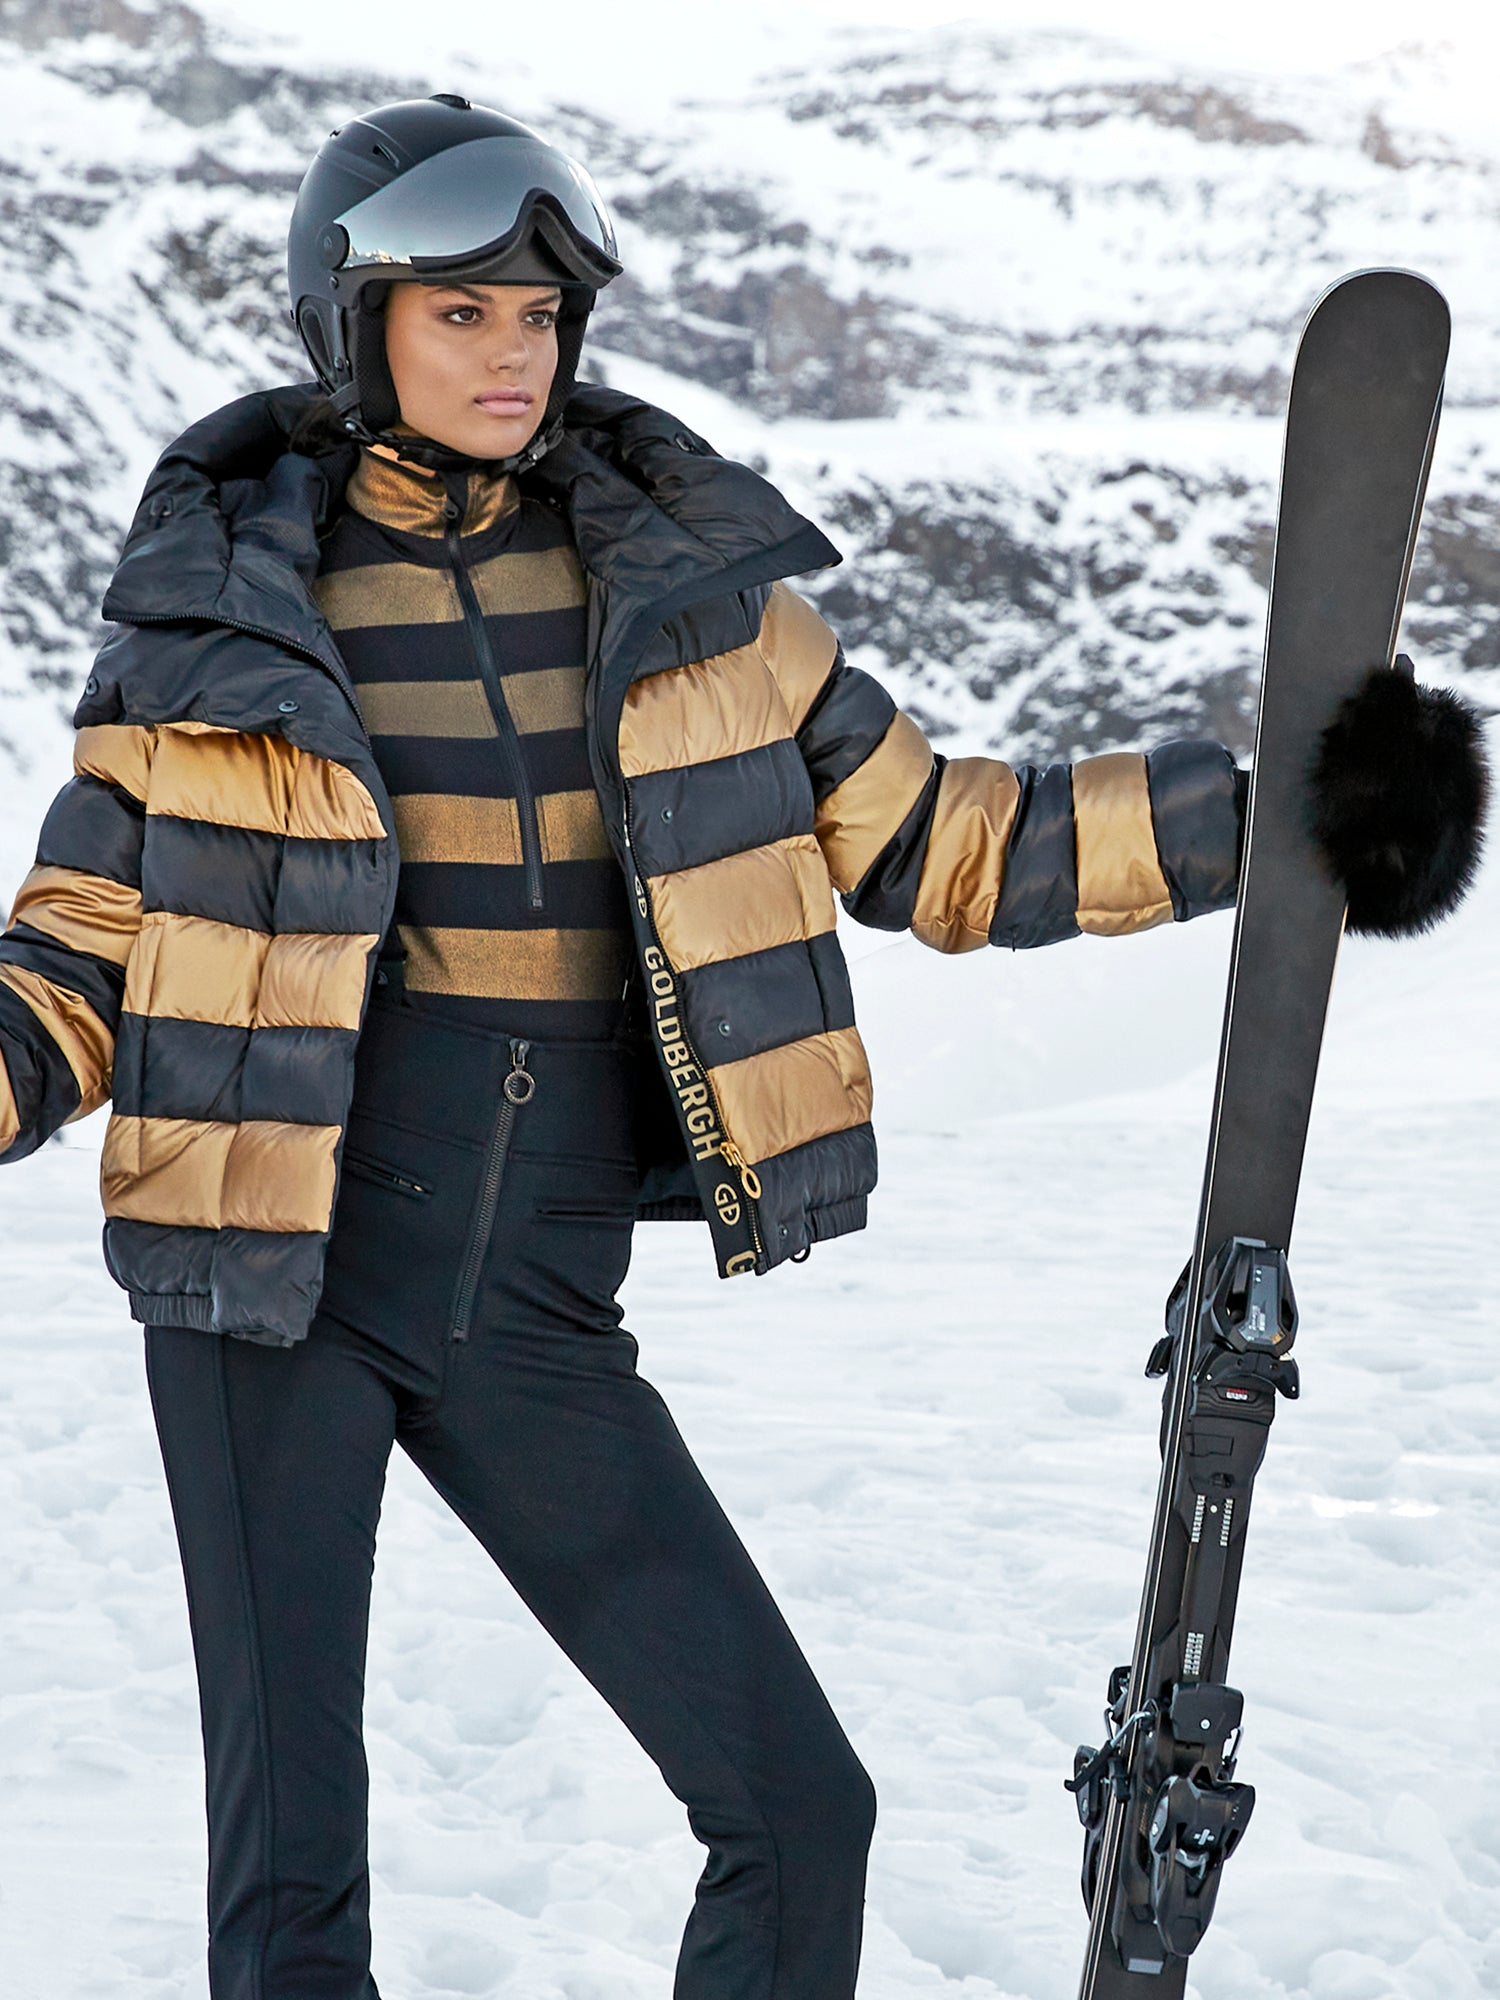 Snow down ski jacket in black - Goldbergh